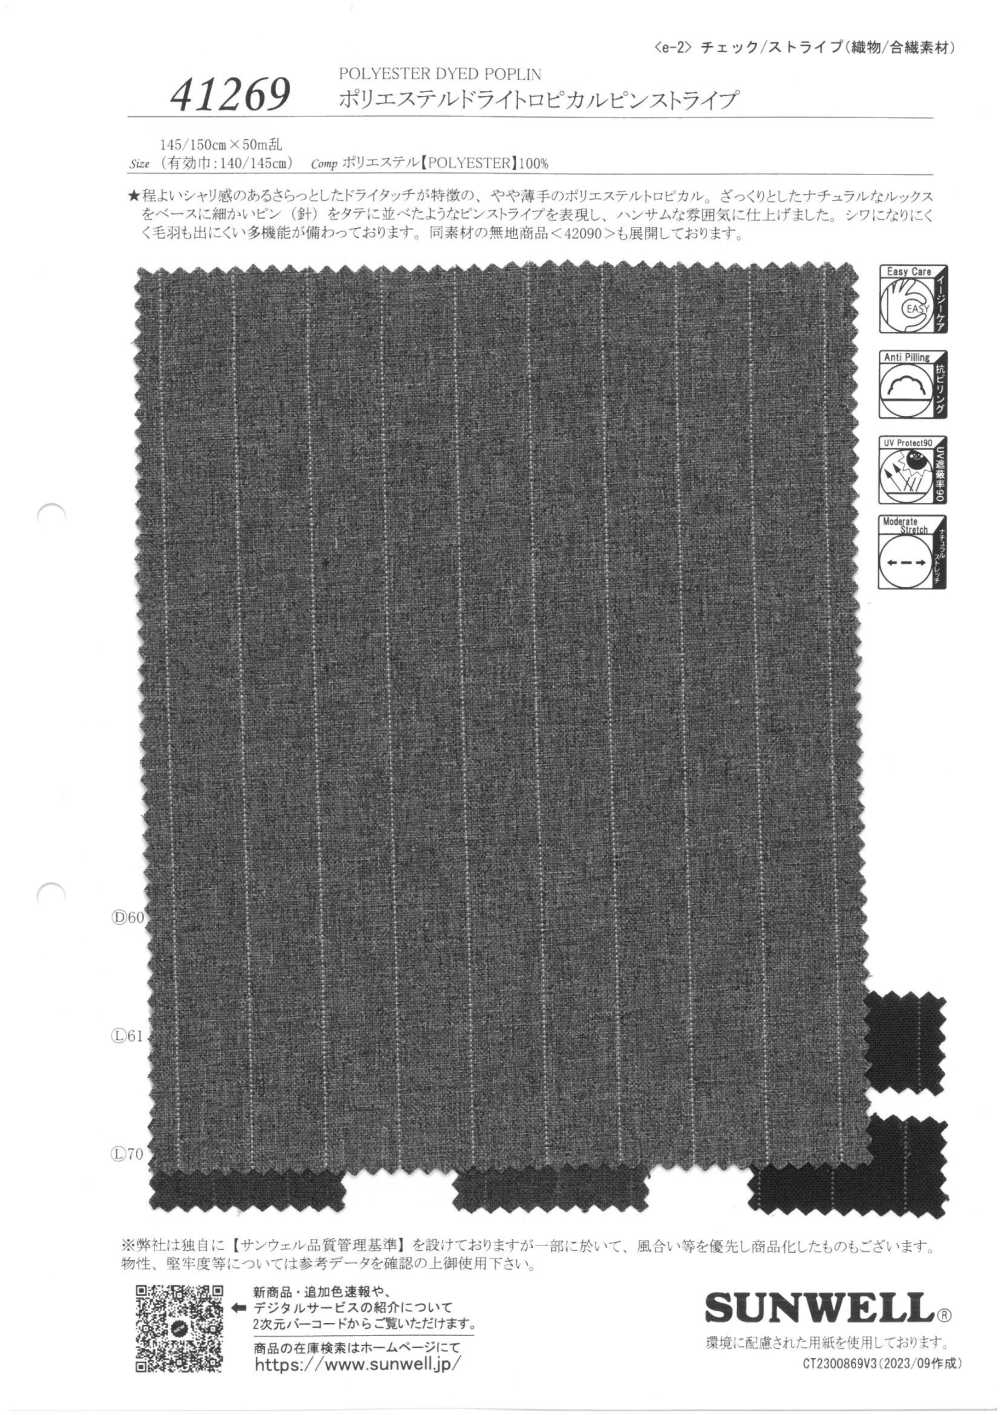 41269 Trockener Tropischer Nadelstreifen Aus Polyester[Textilgewebe] SUNWELL